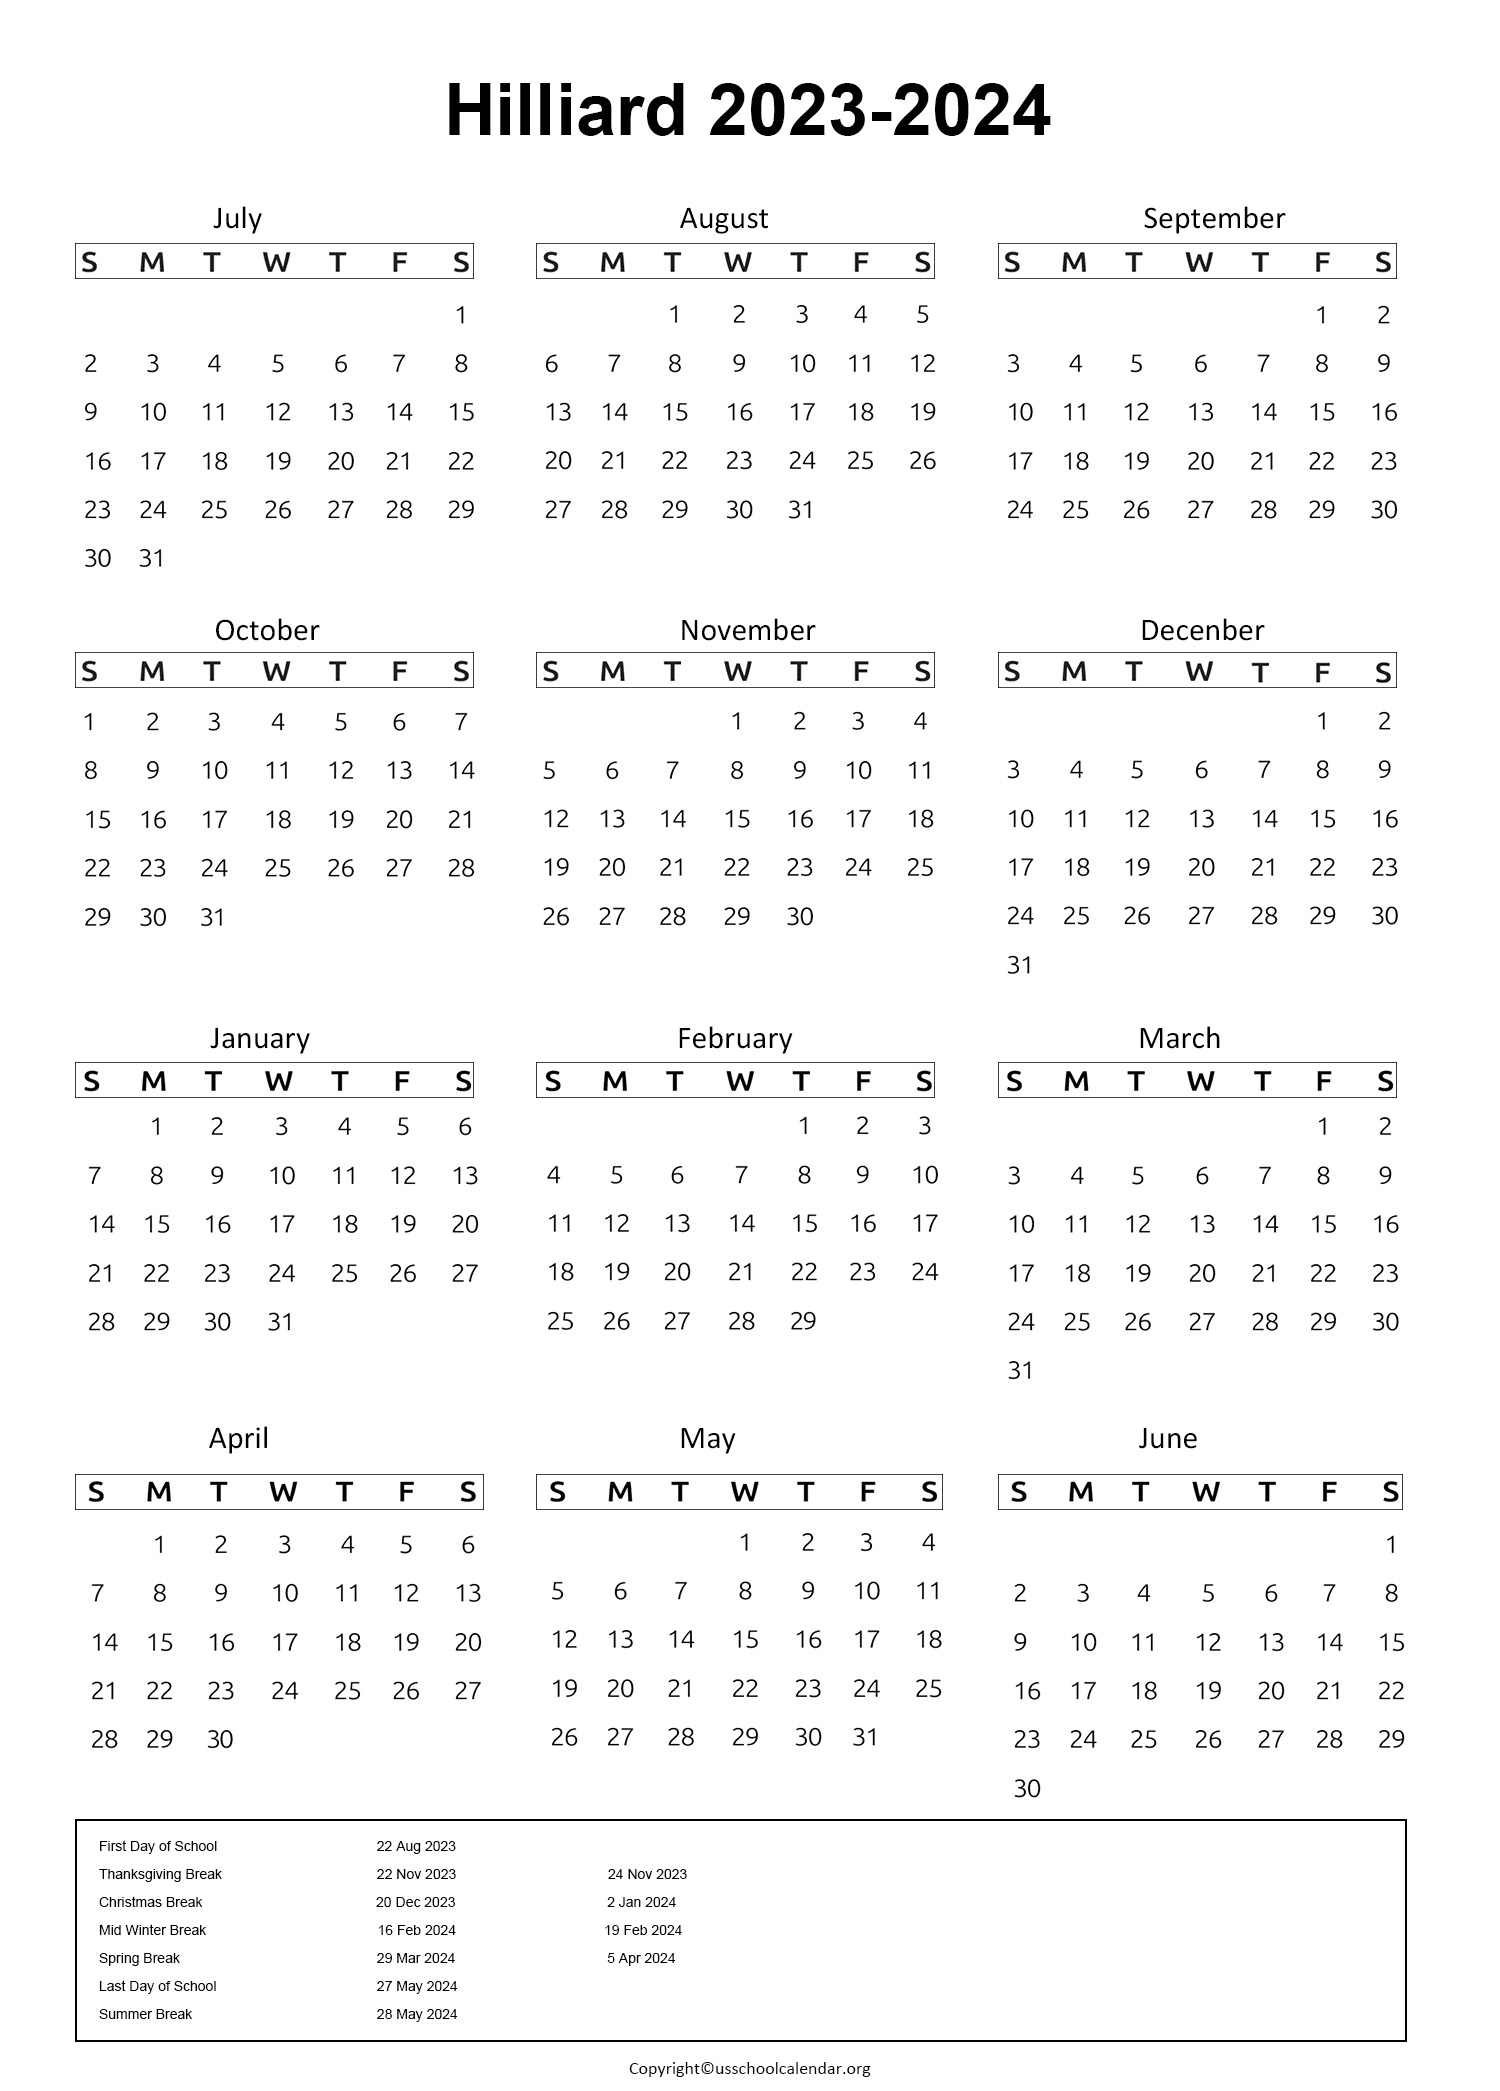 Hilliard City Schools Calendar with Holidays 2023 2024